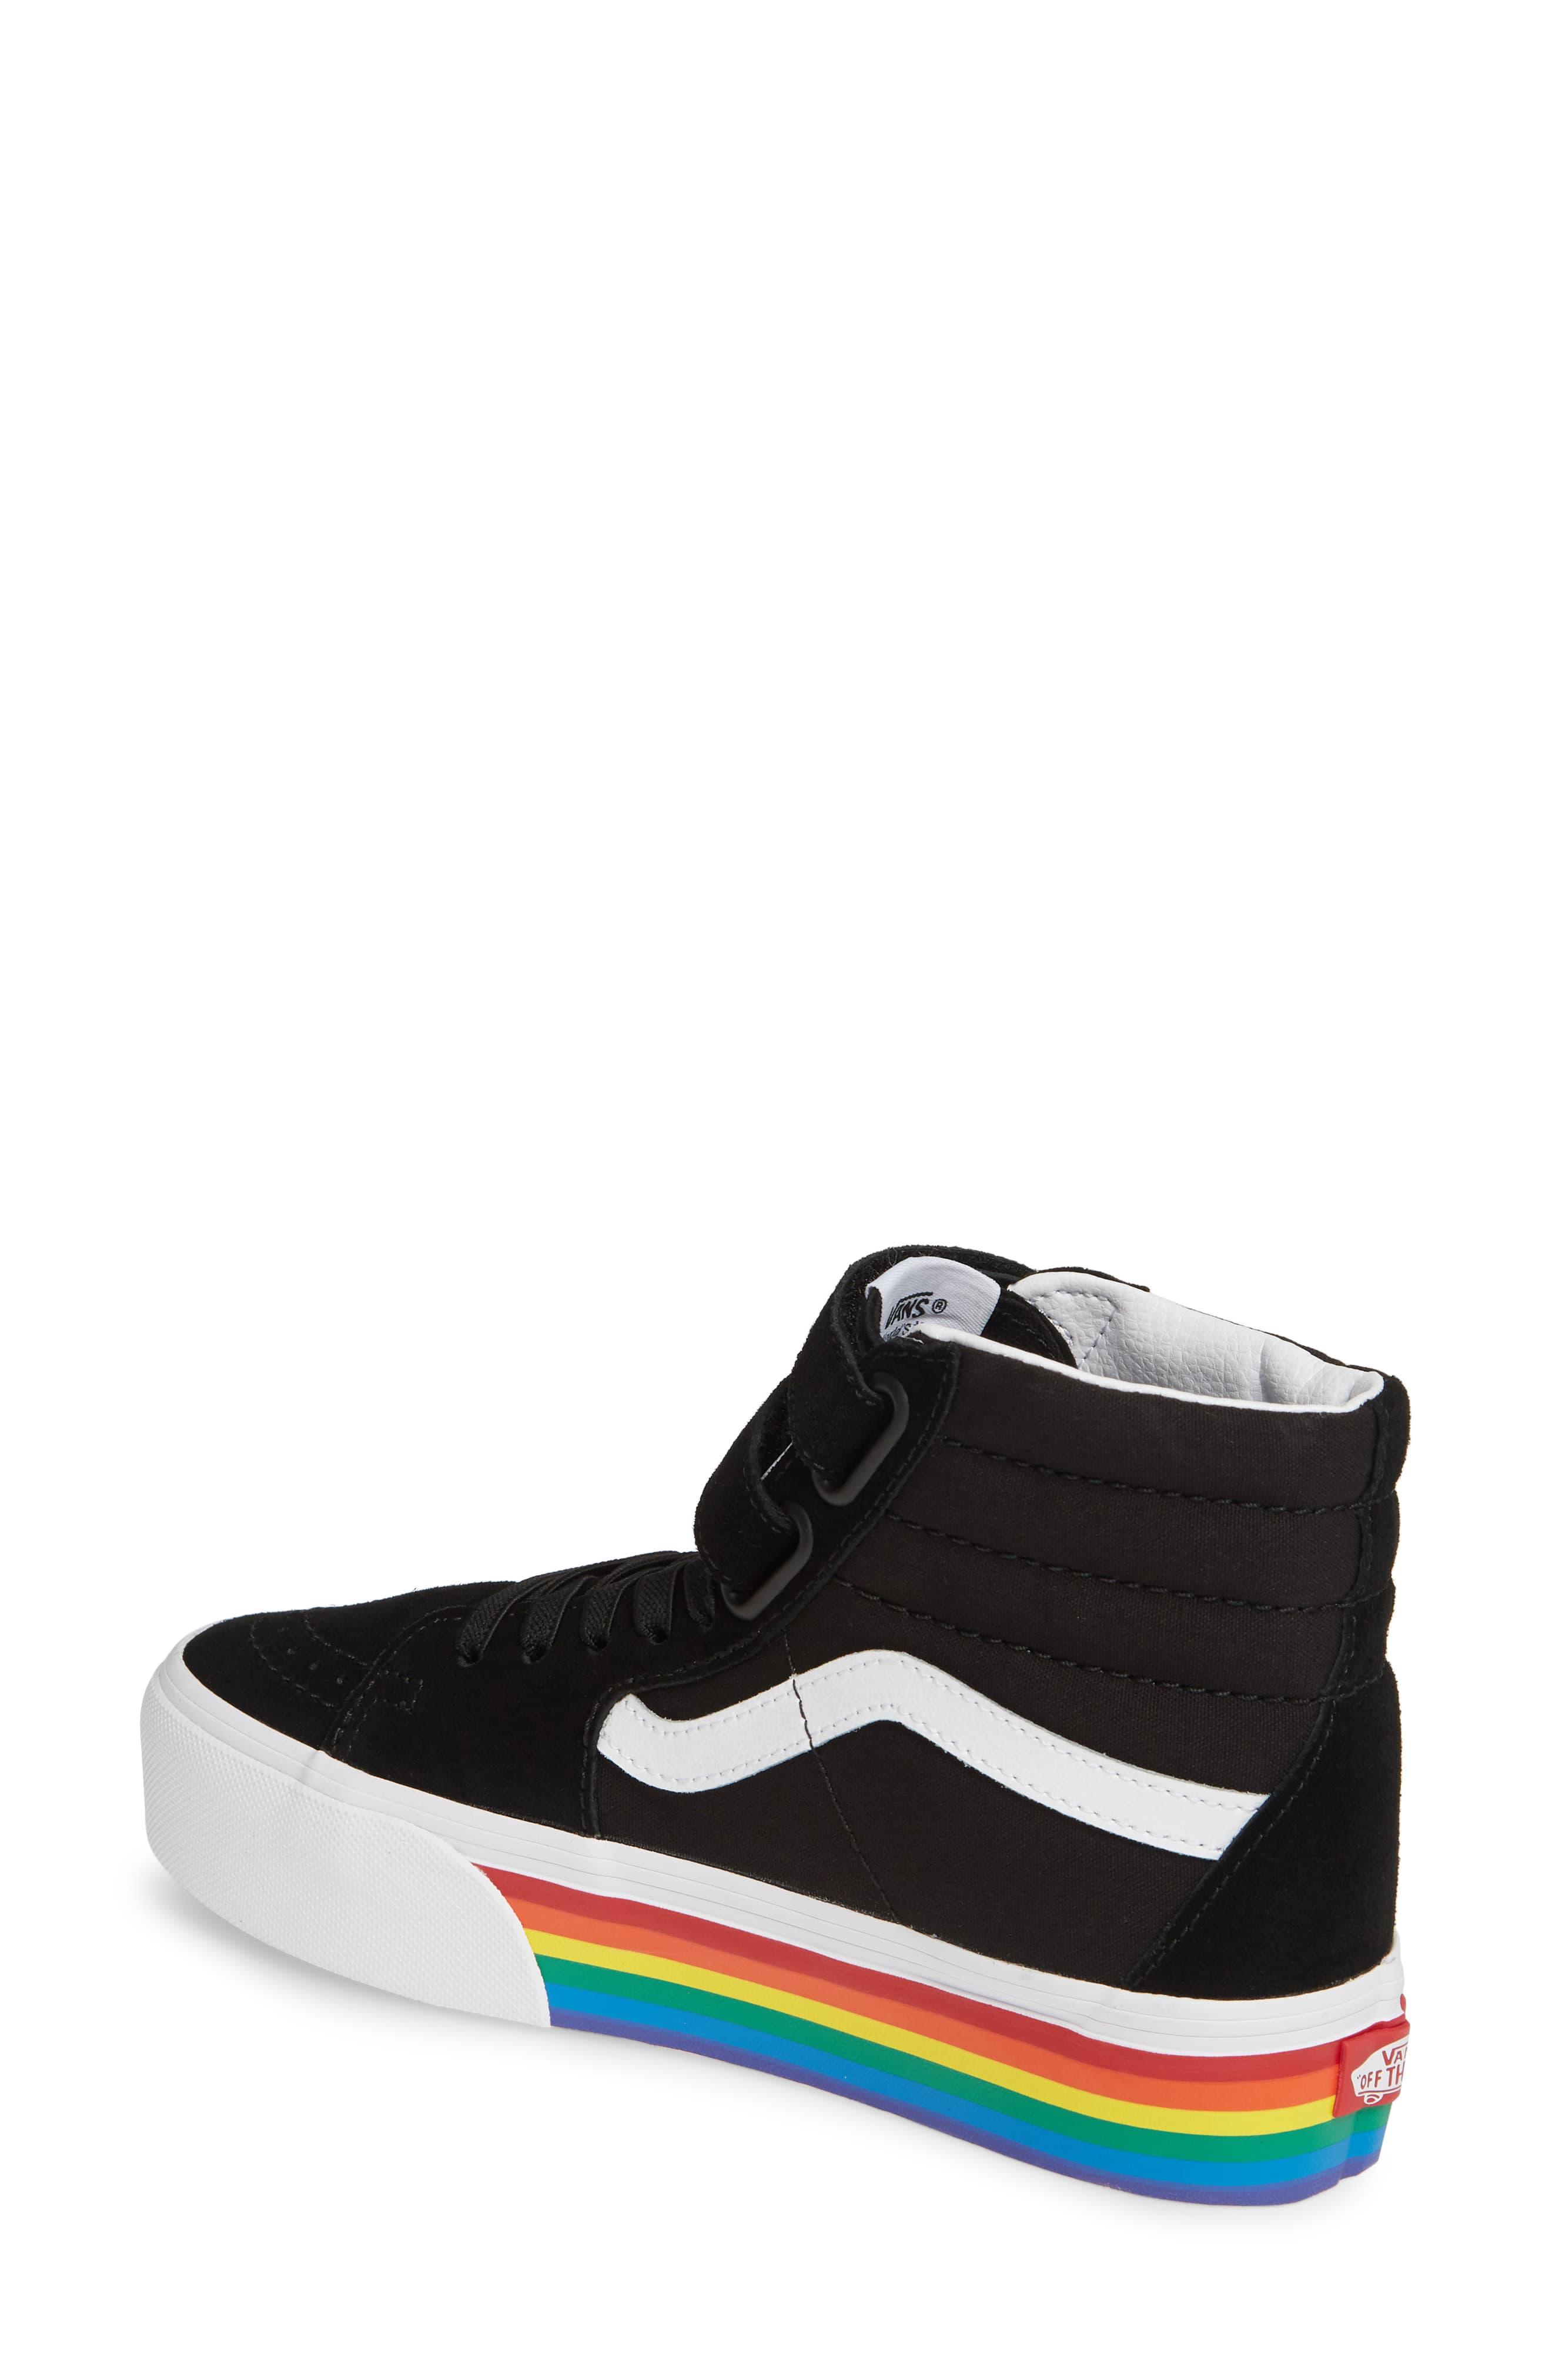 vans rainbow platform shoes